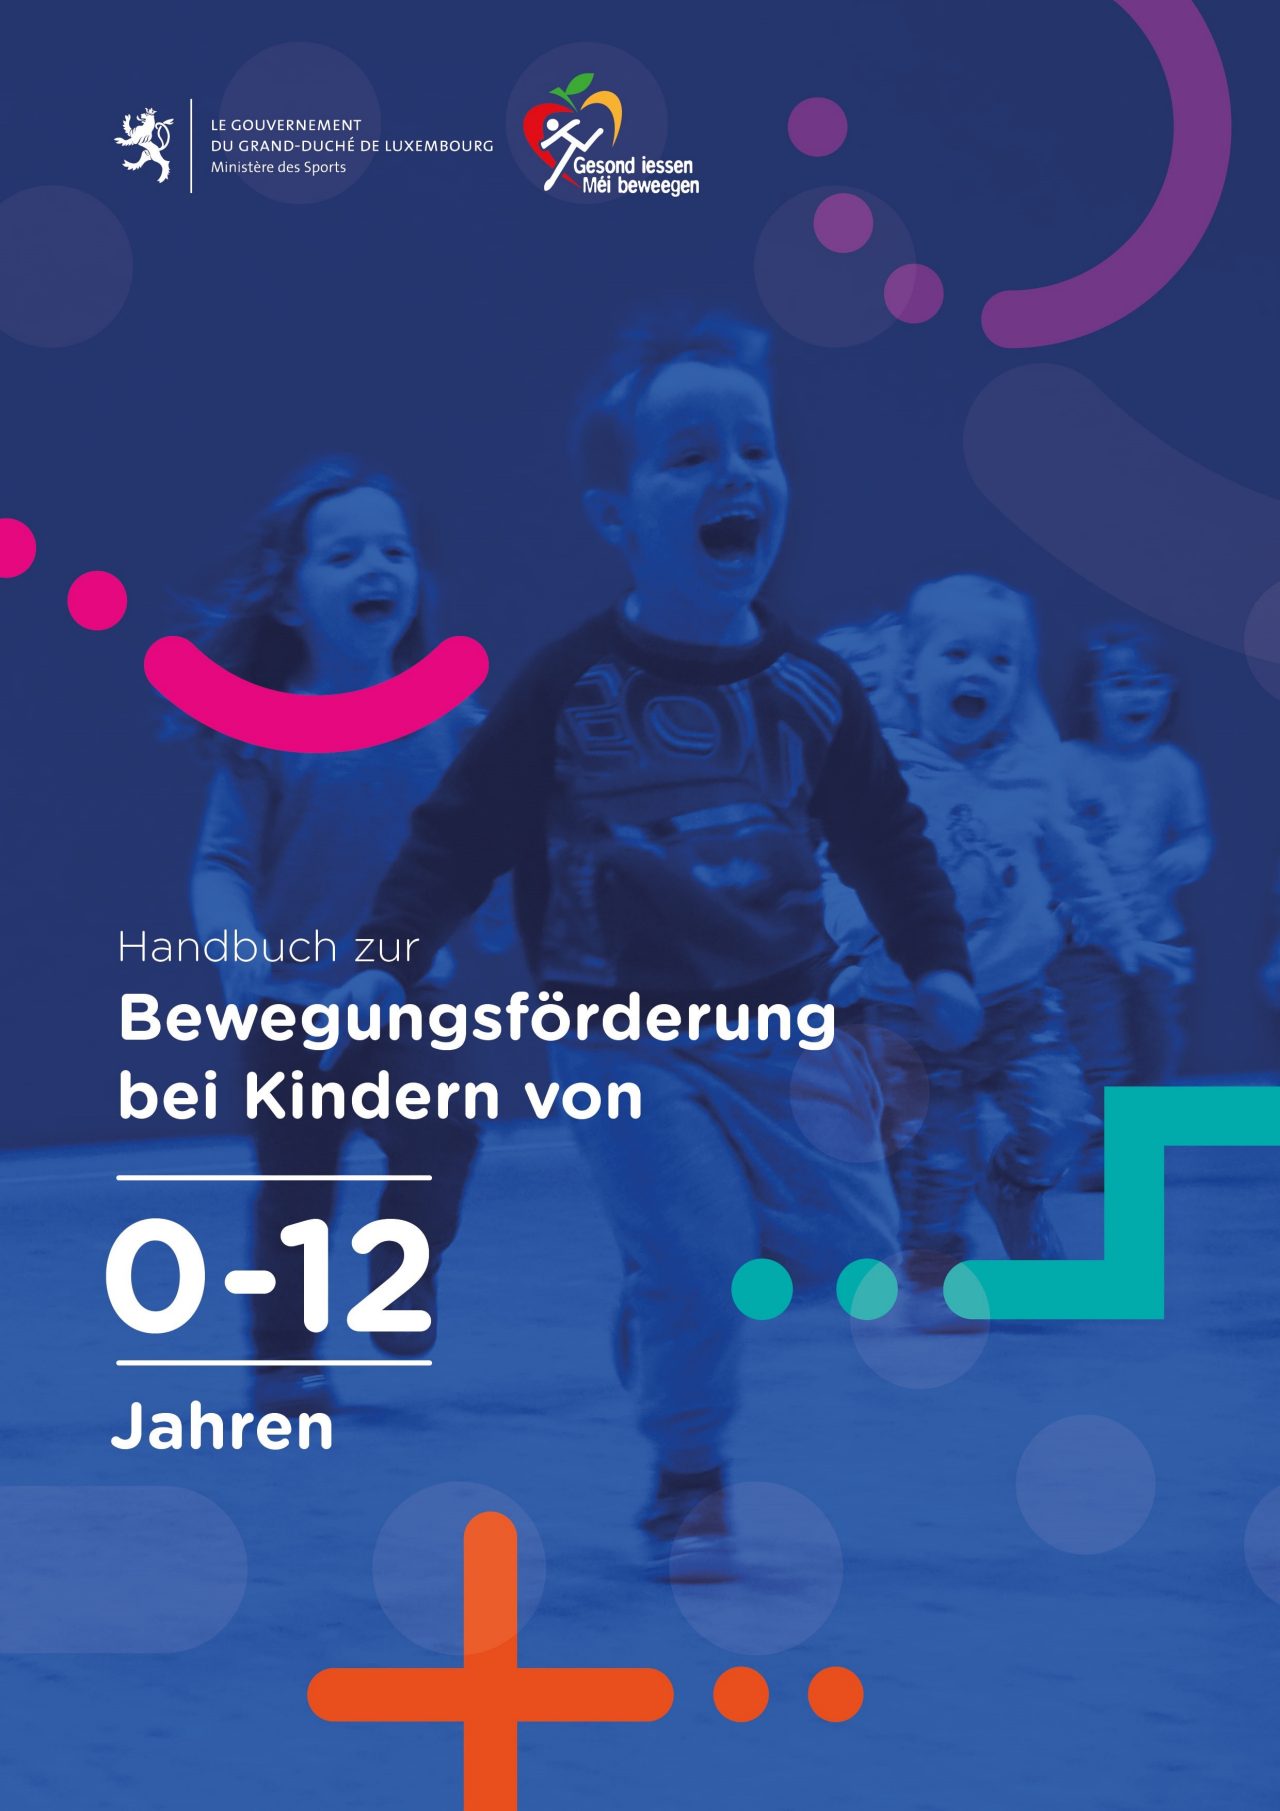 Handbuch zur Bewegungsförderung bei Kindern von 0-12 Jahren écrit par le ministère des Sports dans le cadre du programme Gesond iessen, Méi beweegen.